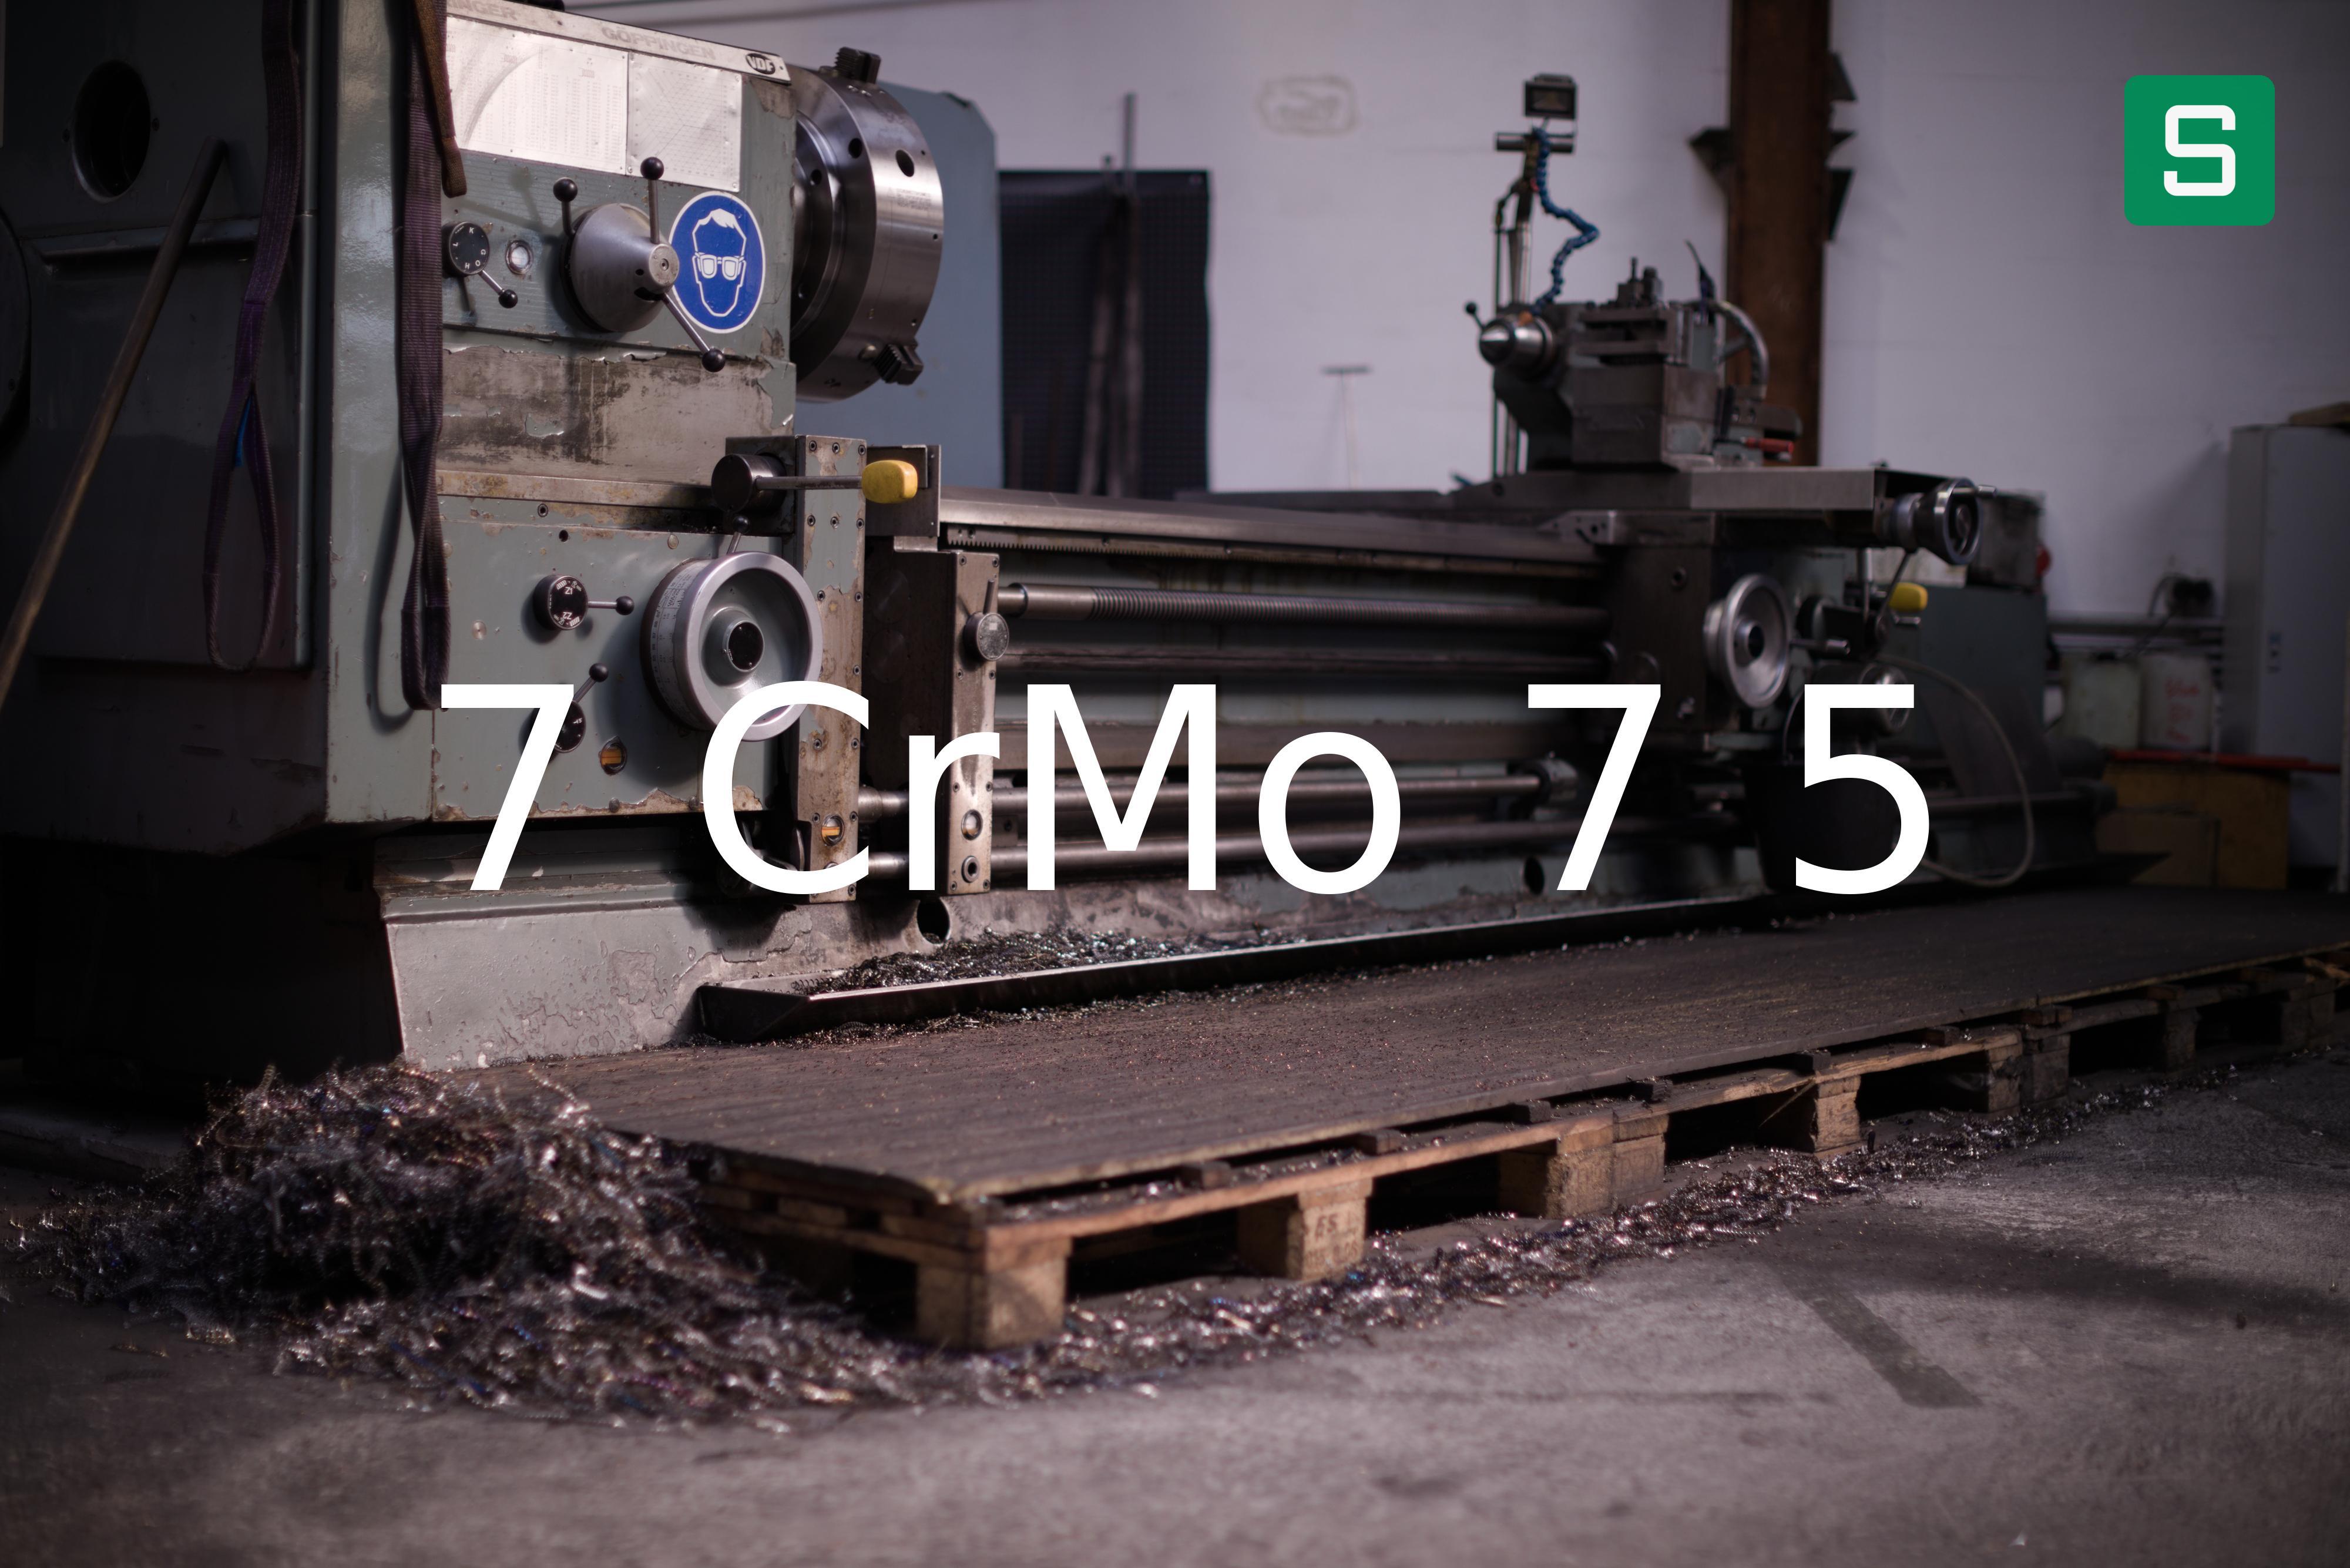 Steel Material: 7 CrMo 7 5